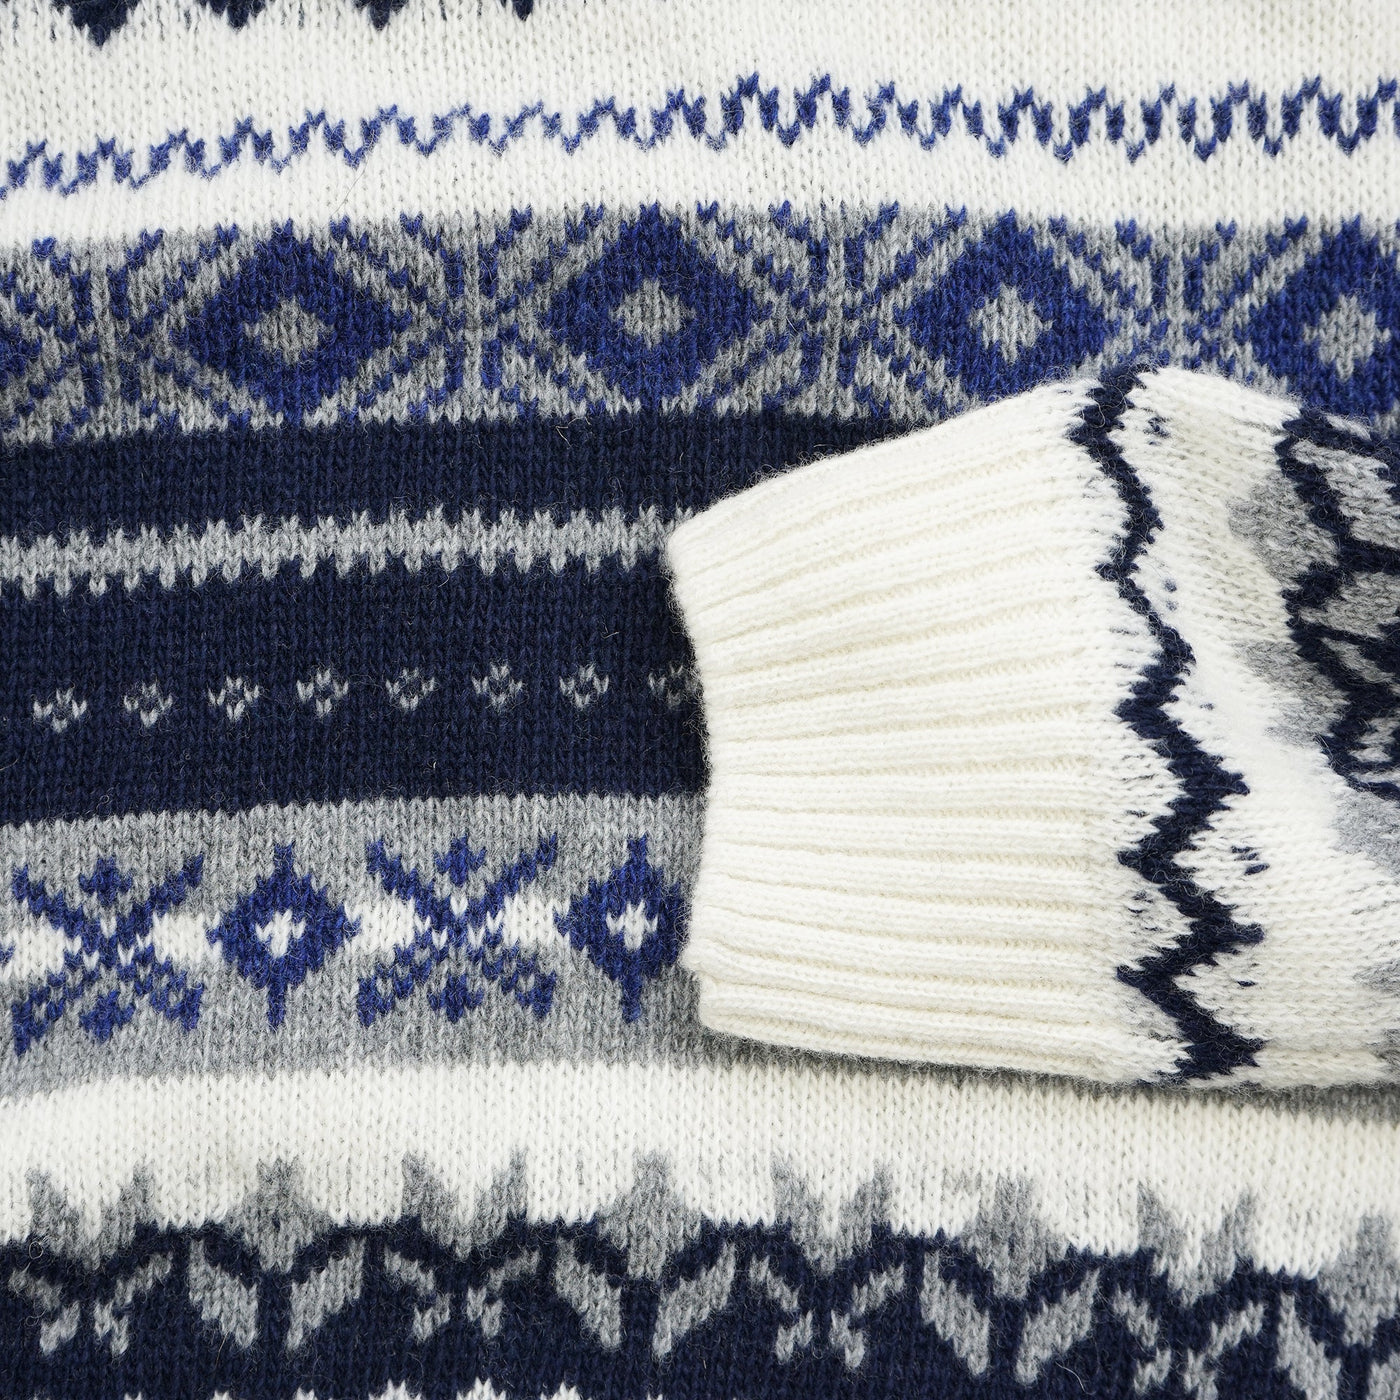 BENSON Chester Fair Crew Knit | WHITE-BLUE